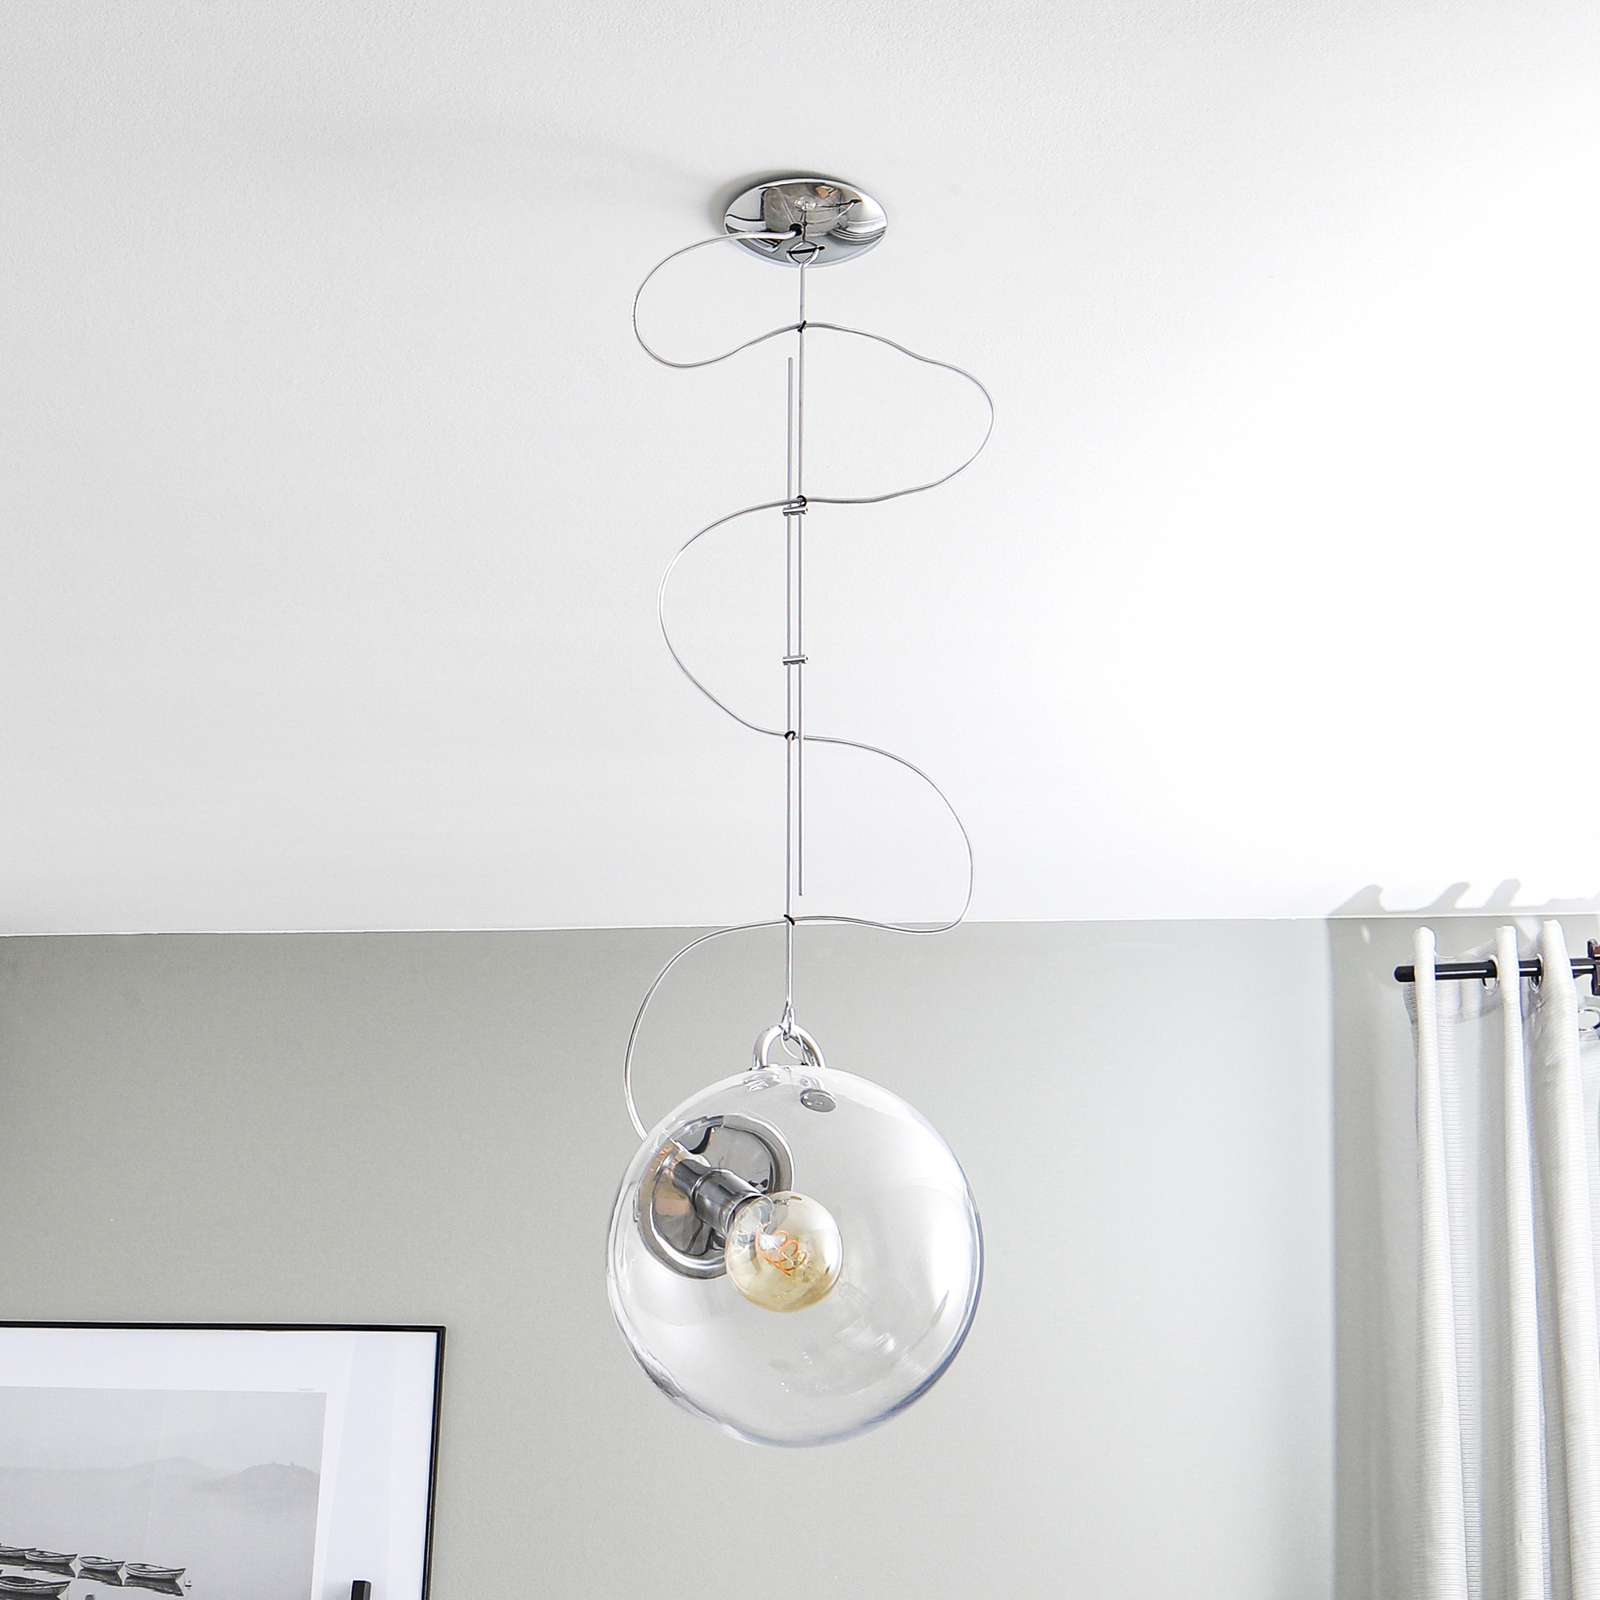 Artemide Miconos glazen hanglamp in chroom